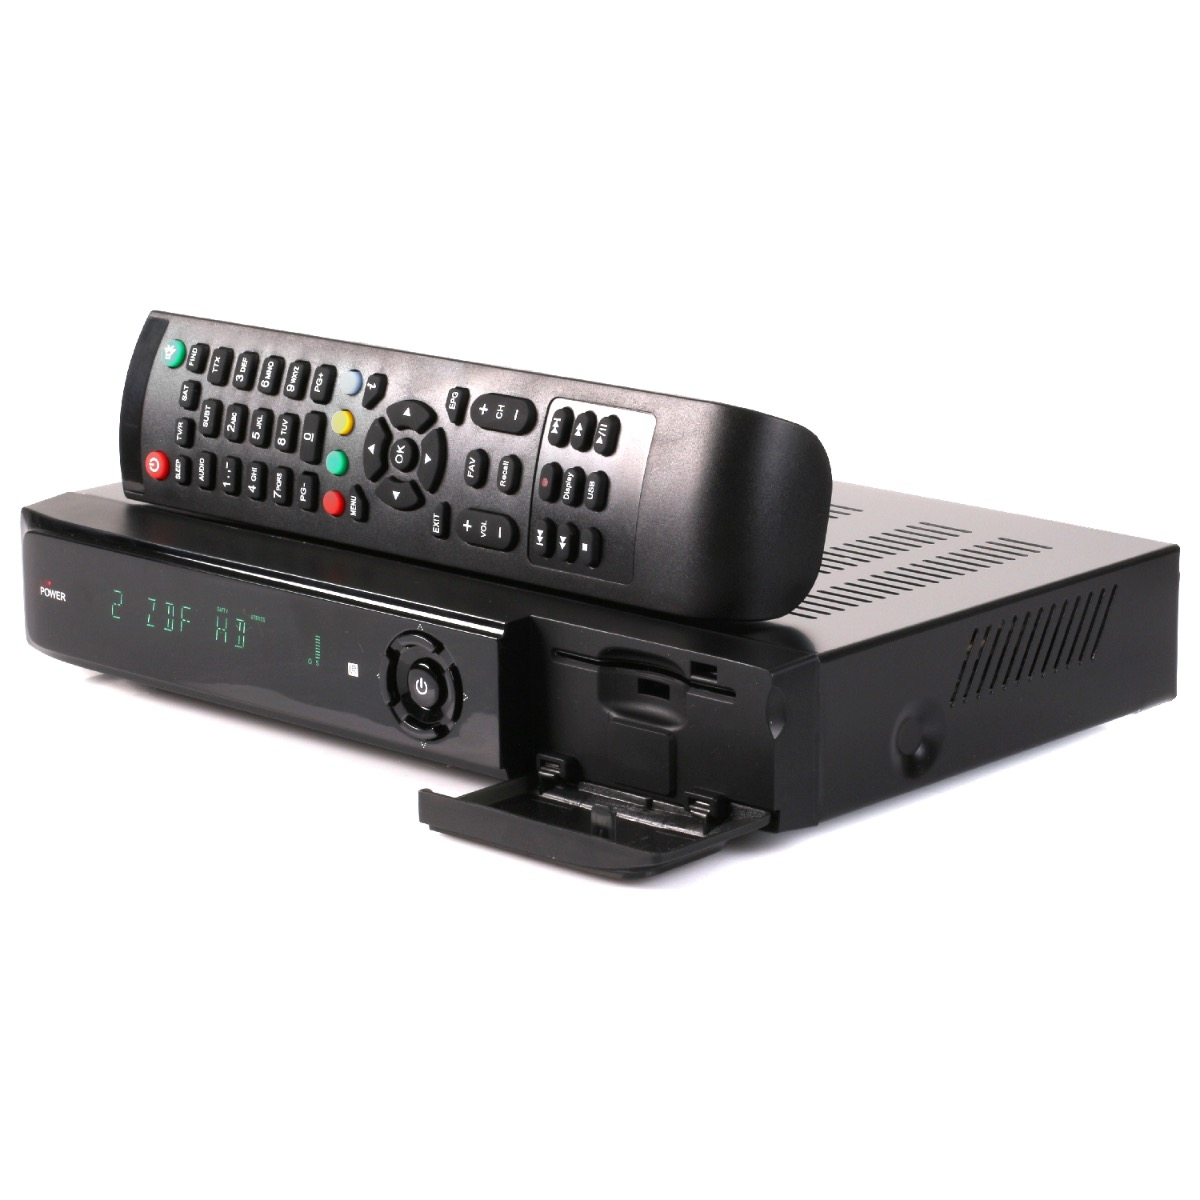 ANKARO ANK aVA mit PVR, 4K, DVB-S2 UHD, IPTV HD (HDTV, DVB-S, H.265, Satelliten Receiver 2160p, PVR-Funktion, schwarz) Receiver, Digitaler DVB-S2X, DVB-S2